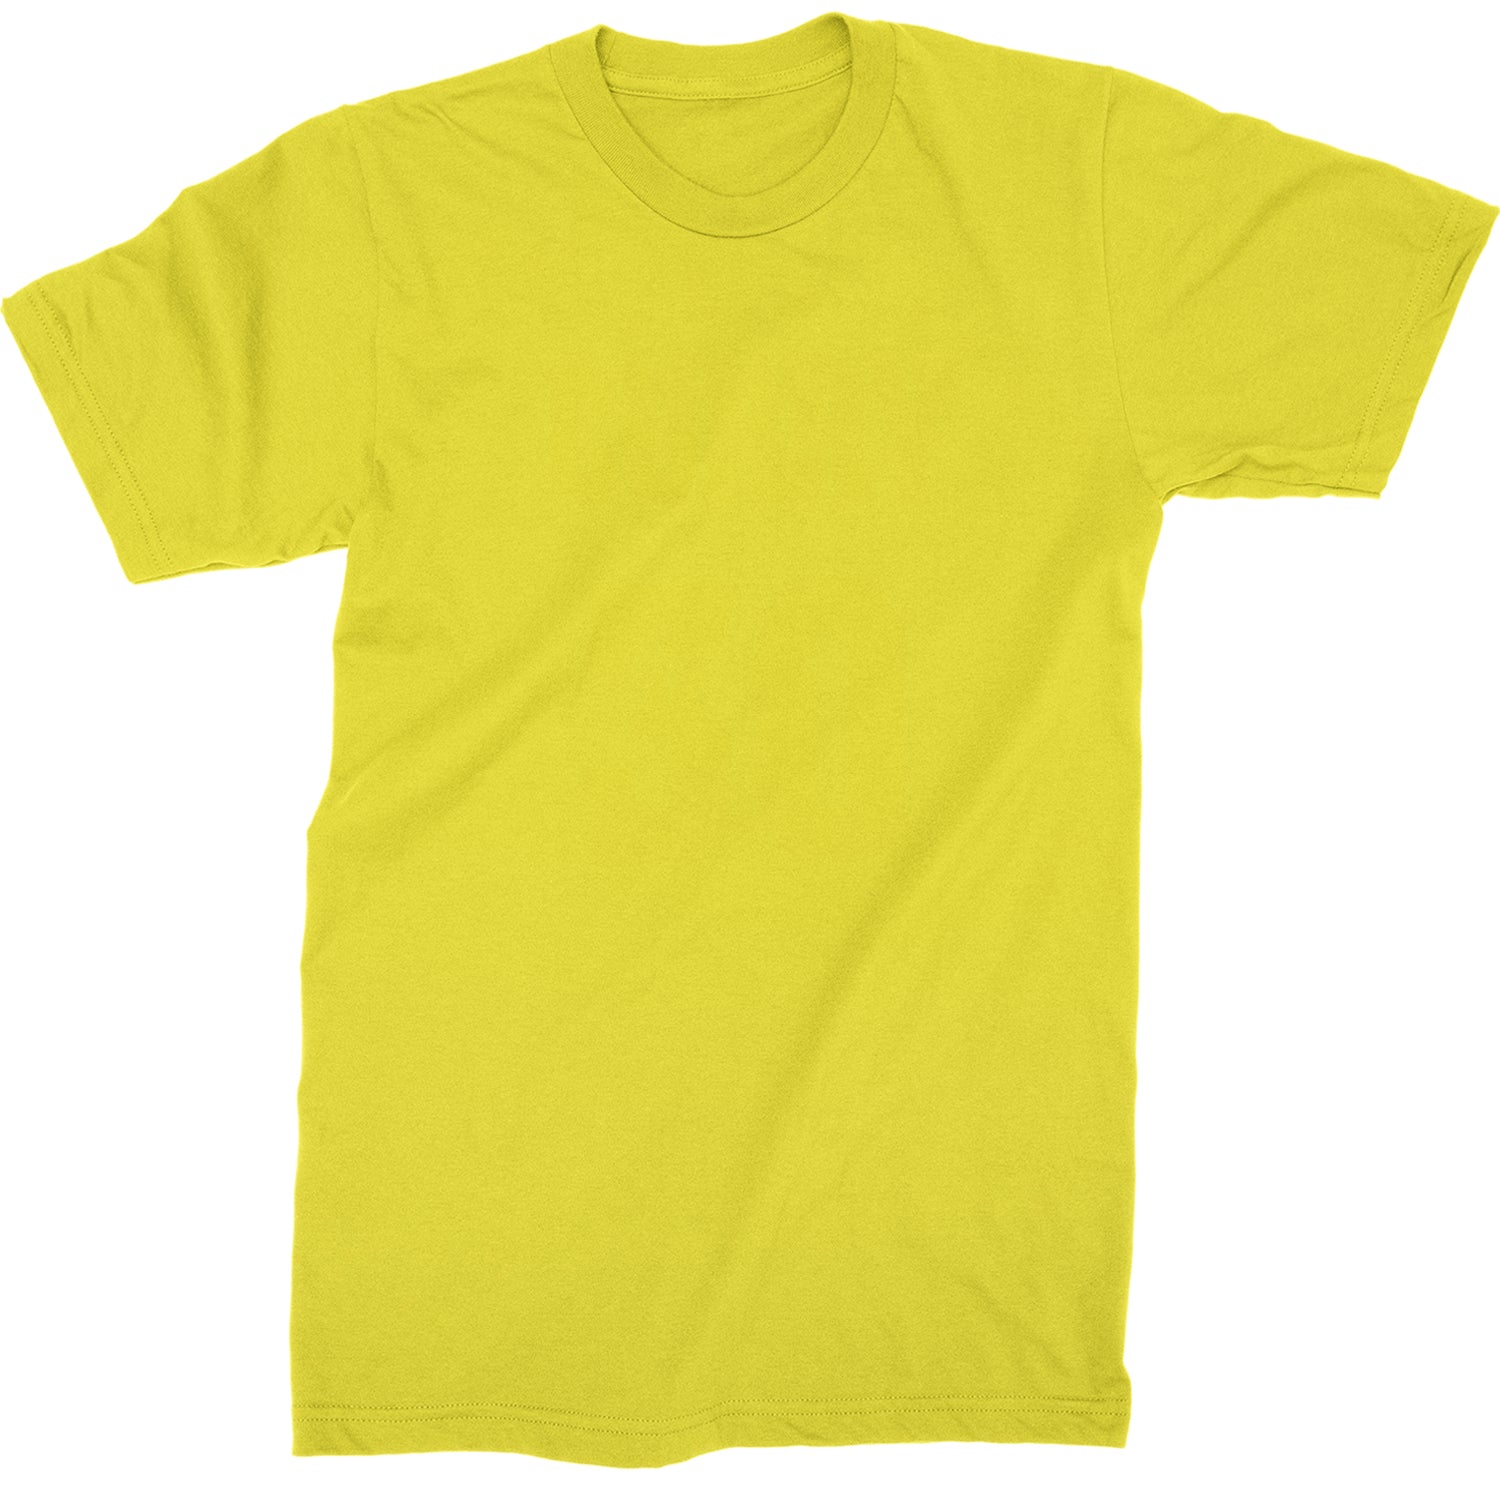 Curry #30 Mens T-shirt